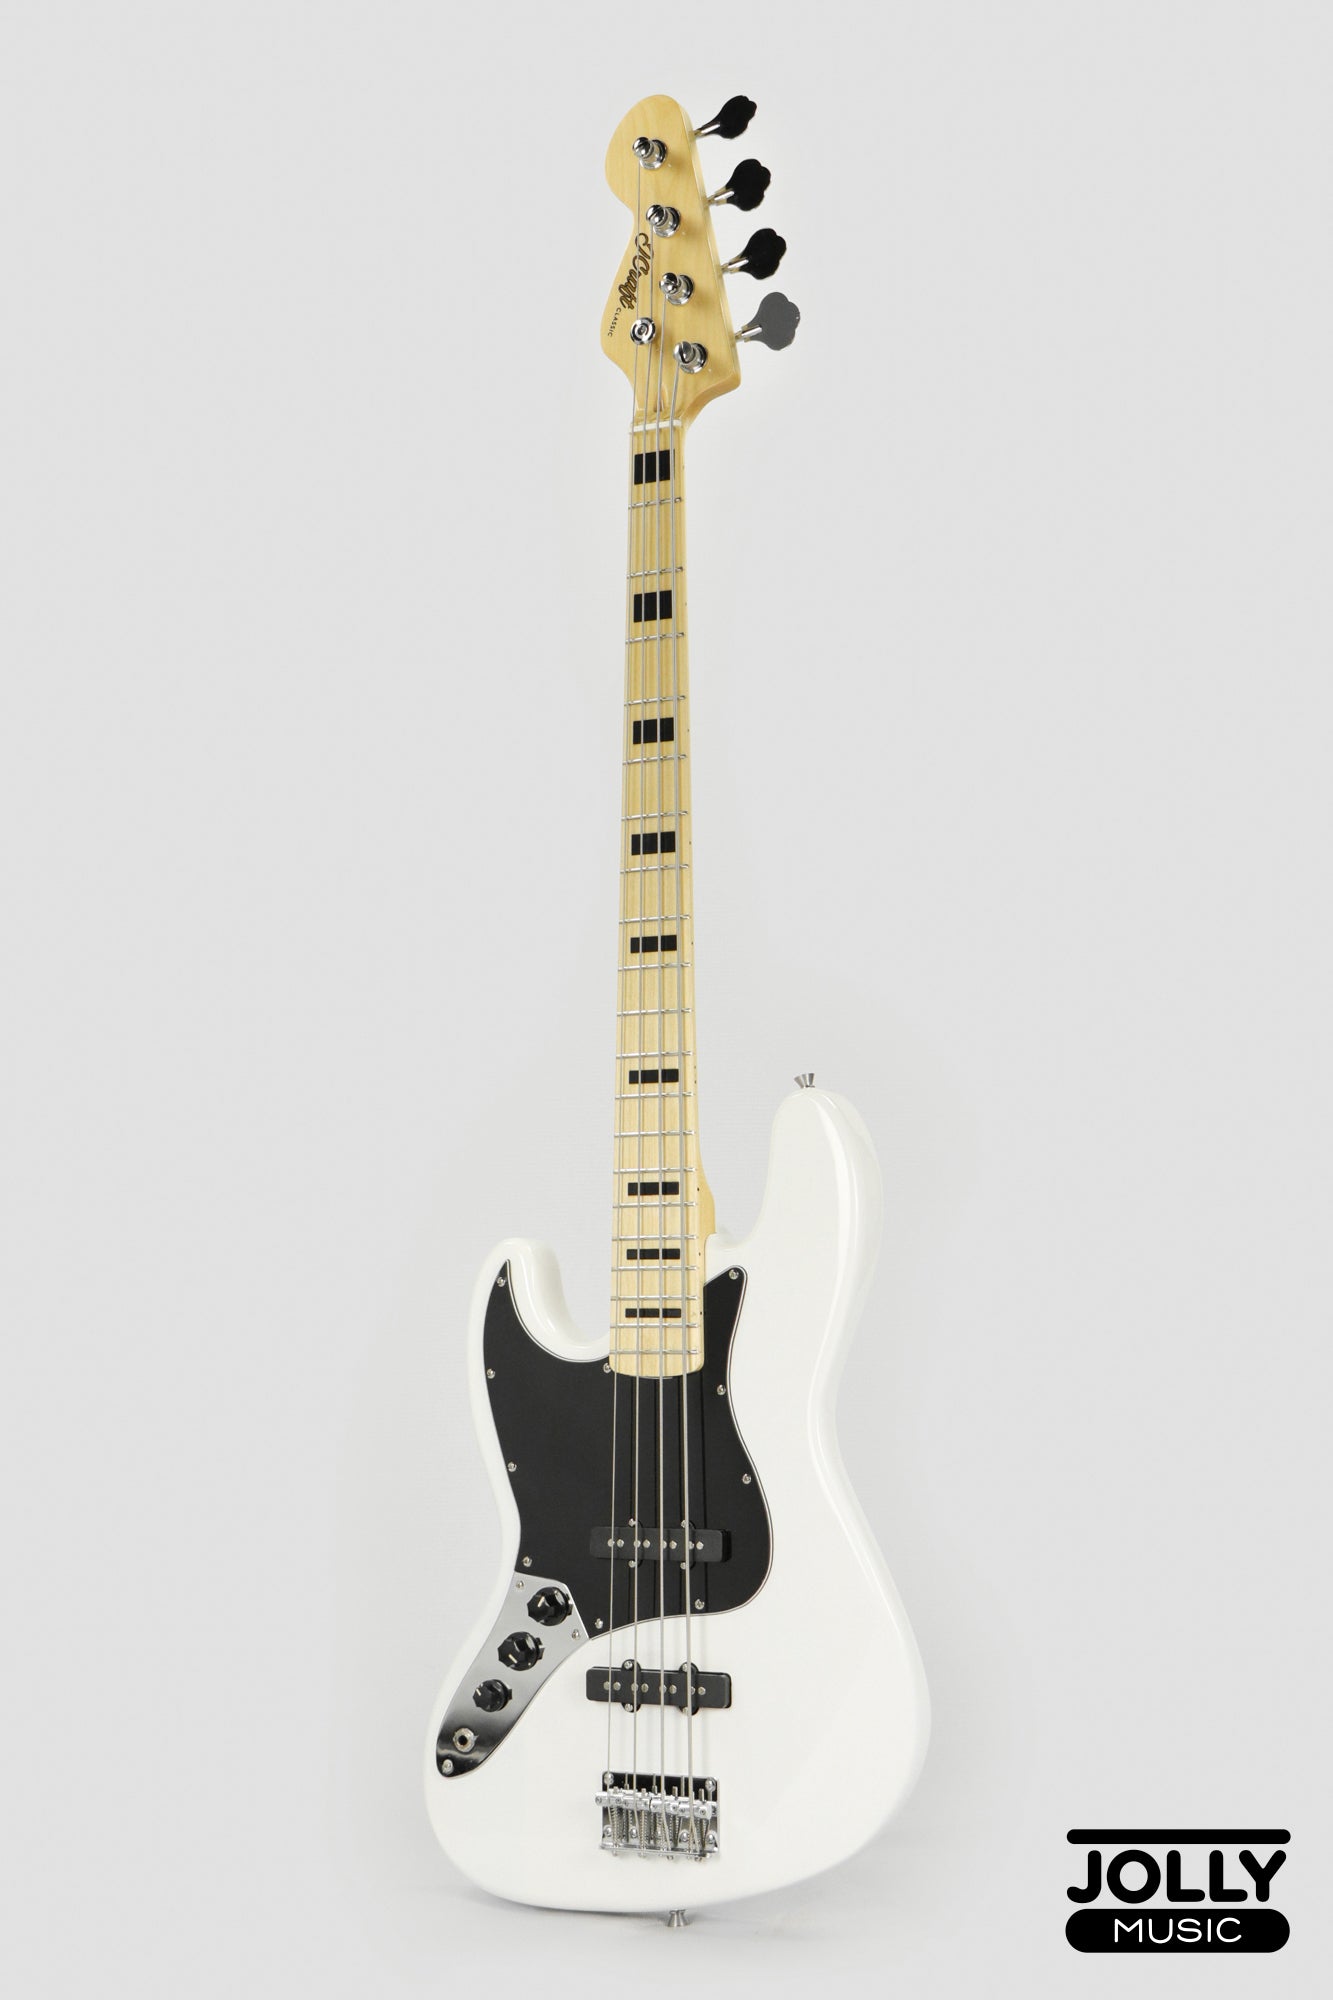 JCraft JB-1 Left Handed J-Offset 4-String Bass Guitar with Gigbag - White